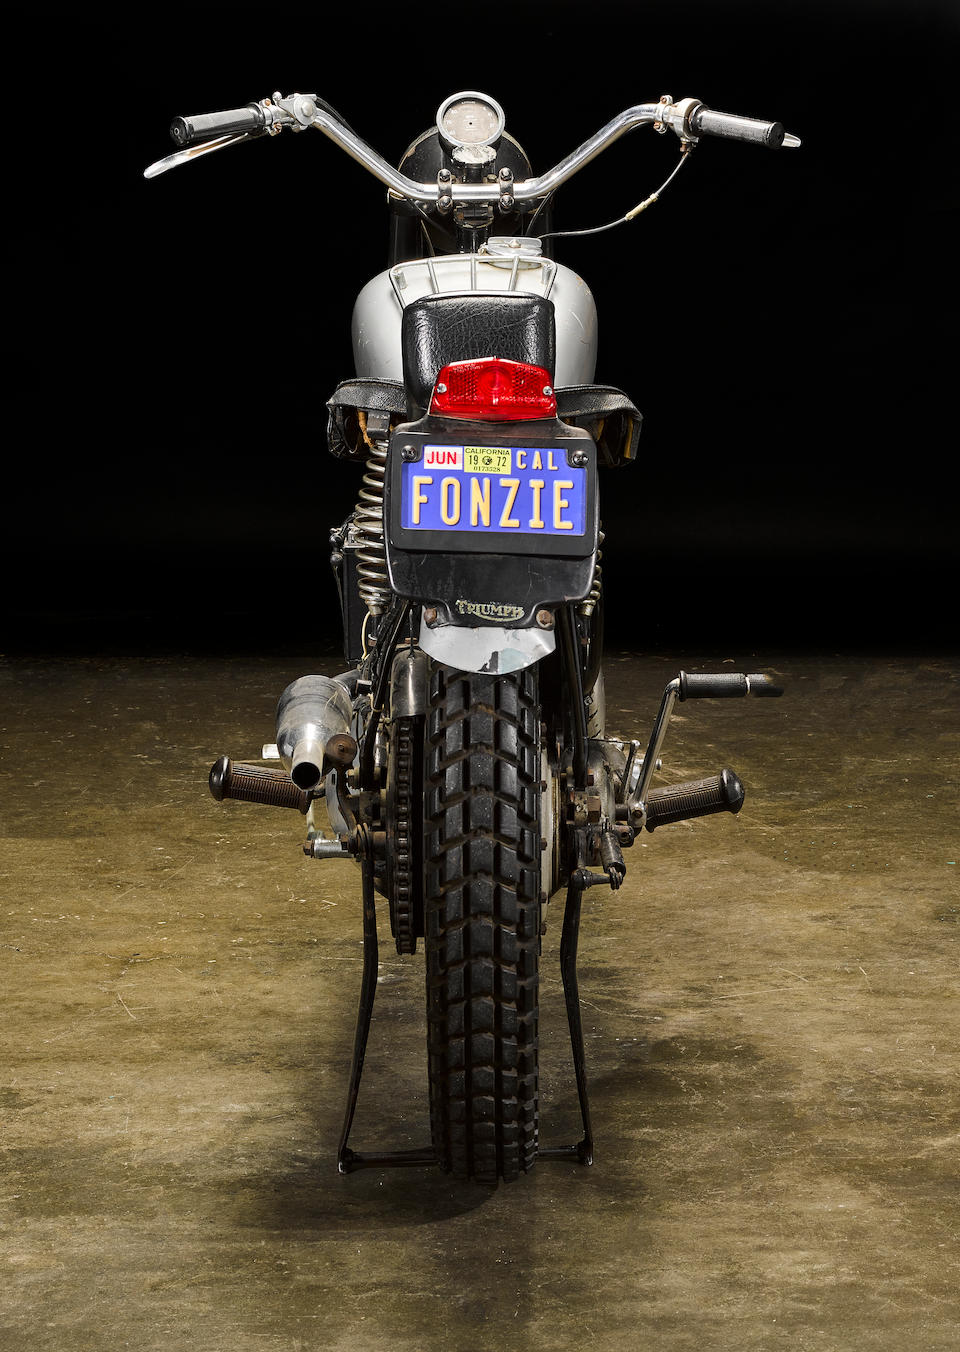 ARTHUR "FONZ" FONZARELLI'S TRIUMPH MOTORBIKE FROM HAPPY DAYS 1949 TRIUMPH TROPHY 500 CUSTOMFRAME NO. TC11198T ENGINE NO. TR59106133